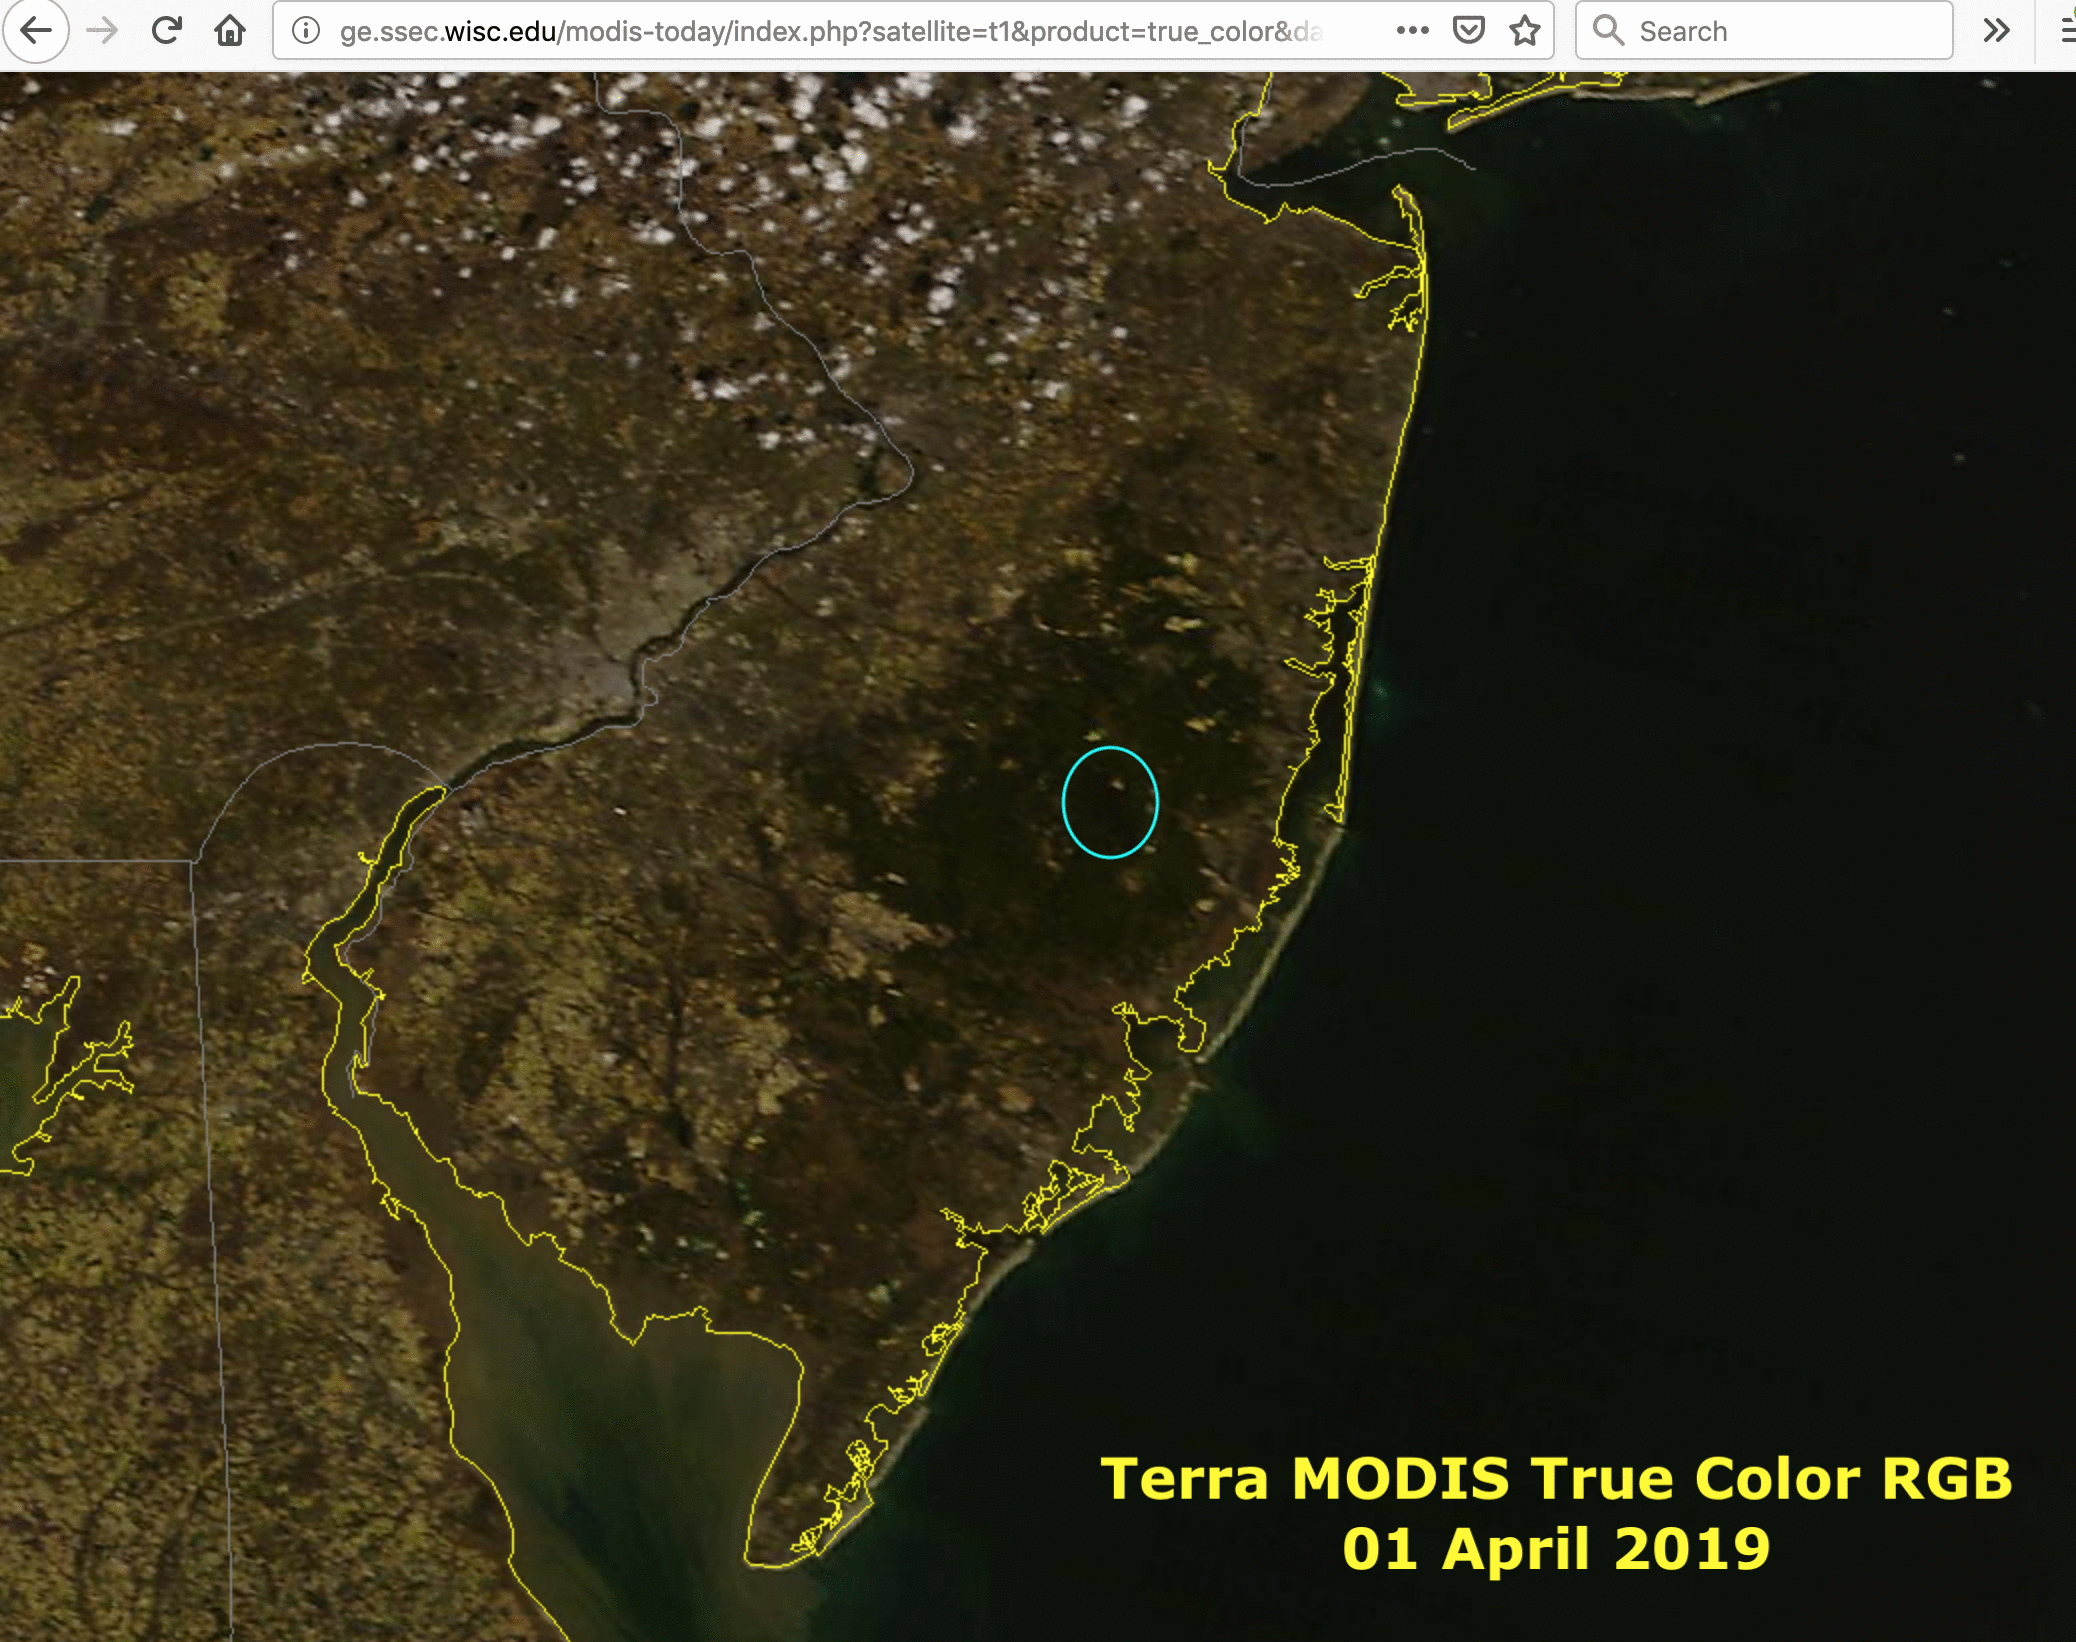 Terra MODIS True Color and False Color images on 01 April [cick to enlarge]